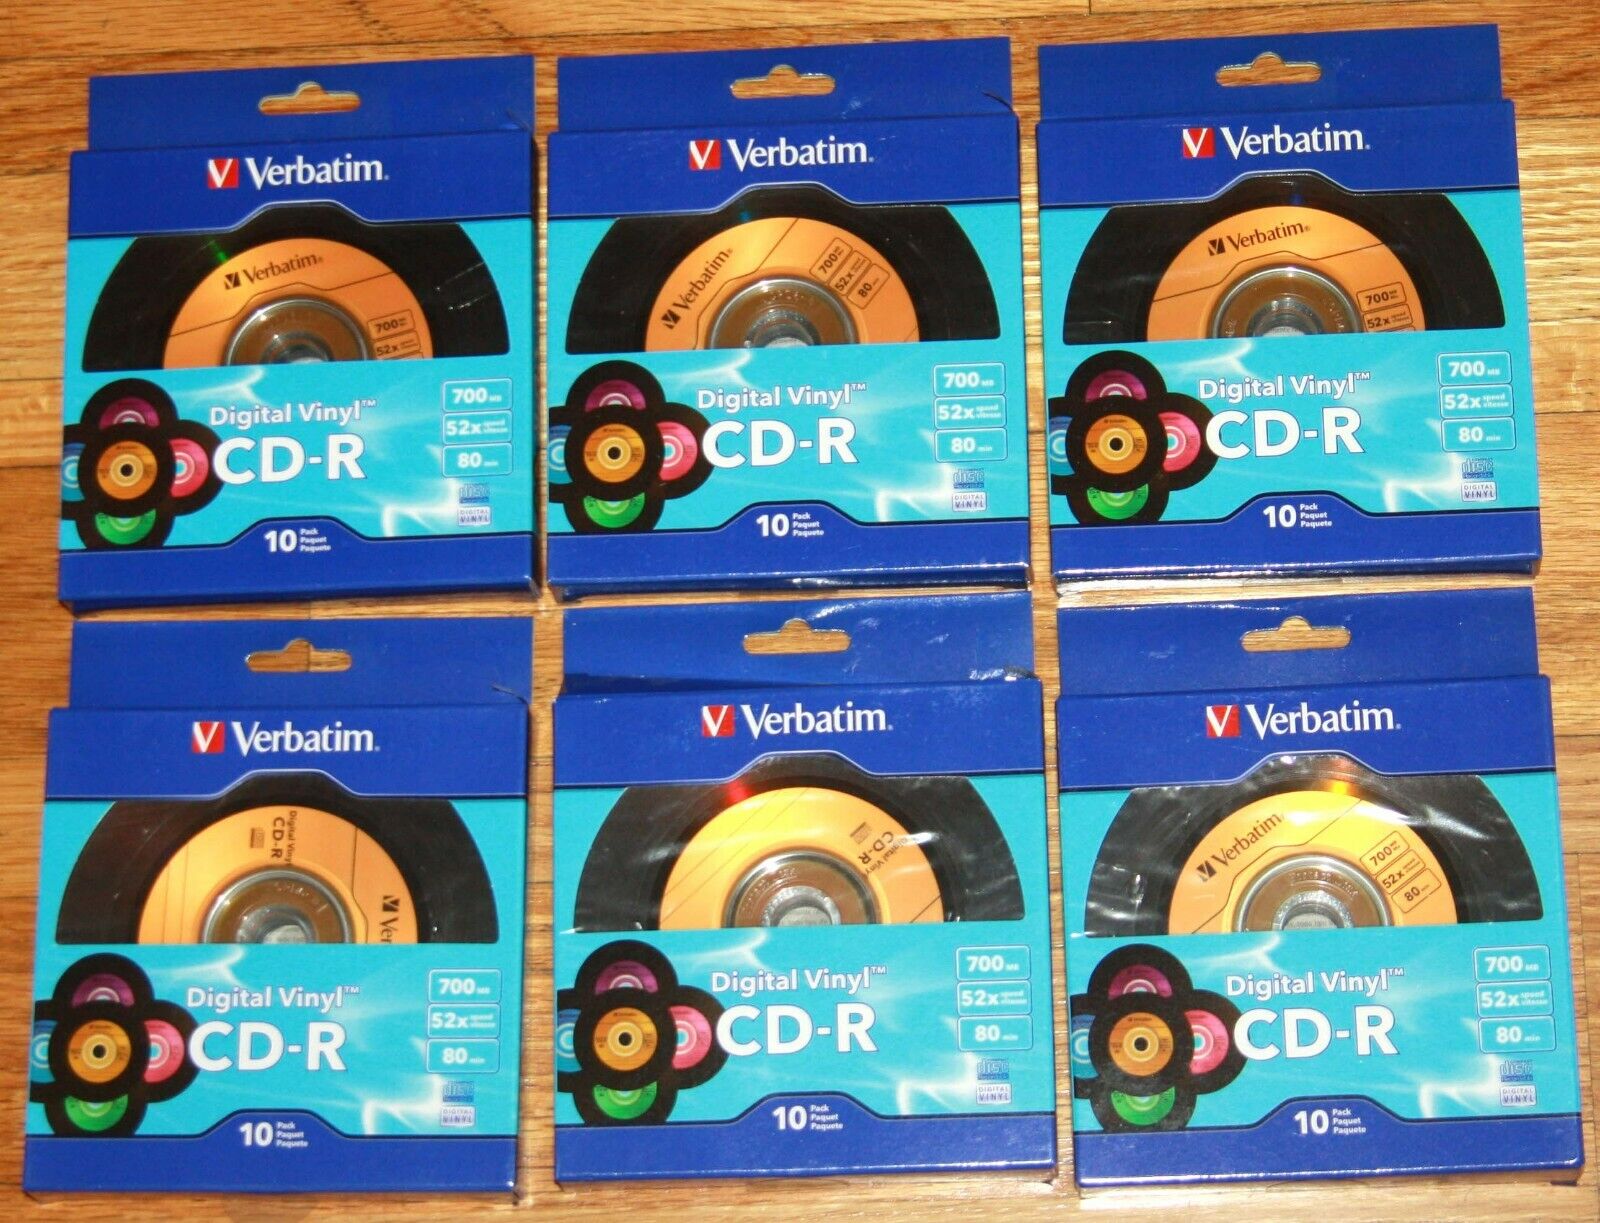 Verbatim Digital Vinyl CD-R 700MB 52x 80min 97935 6 packages 60 discs New Sealed